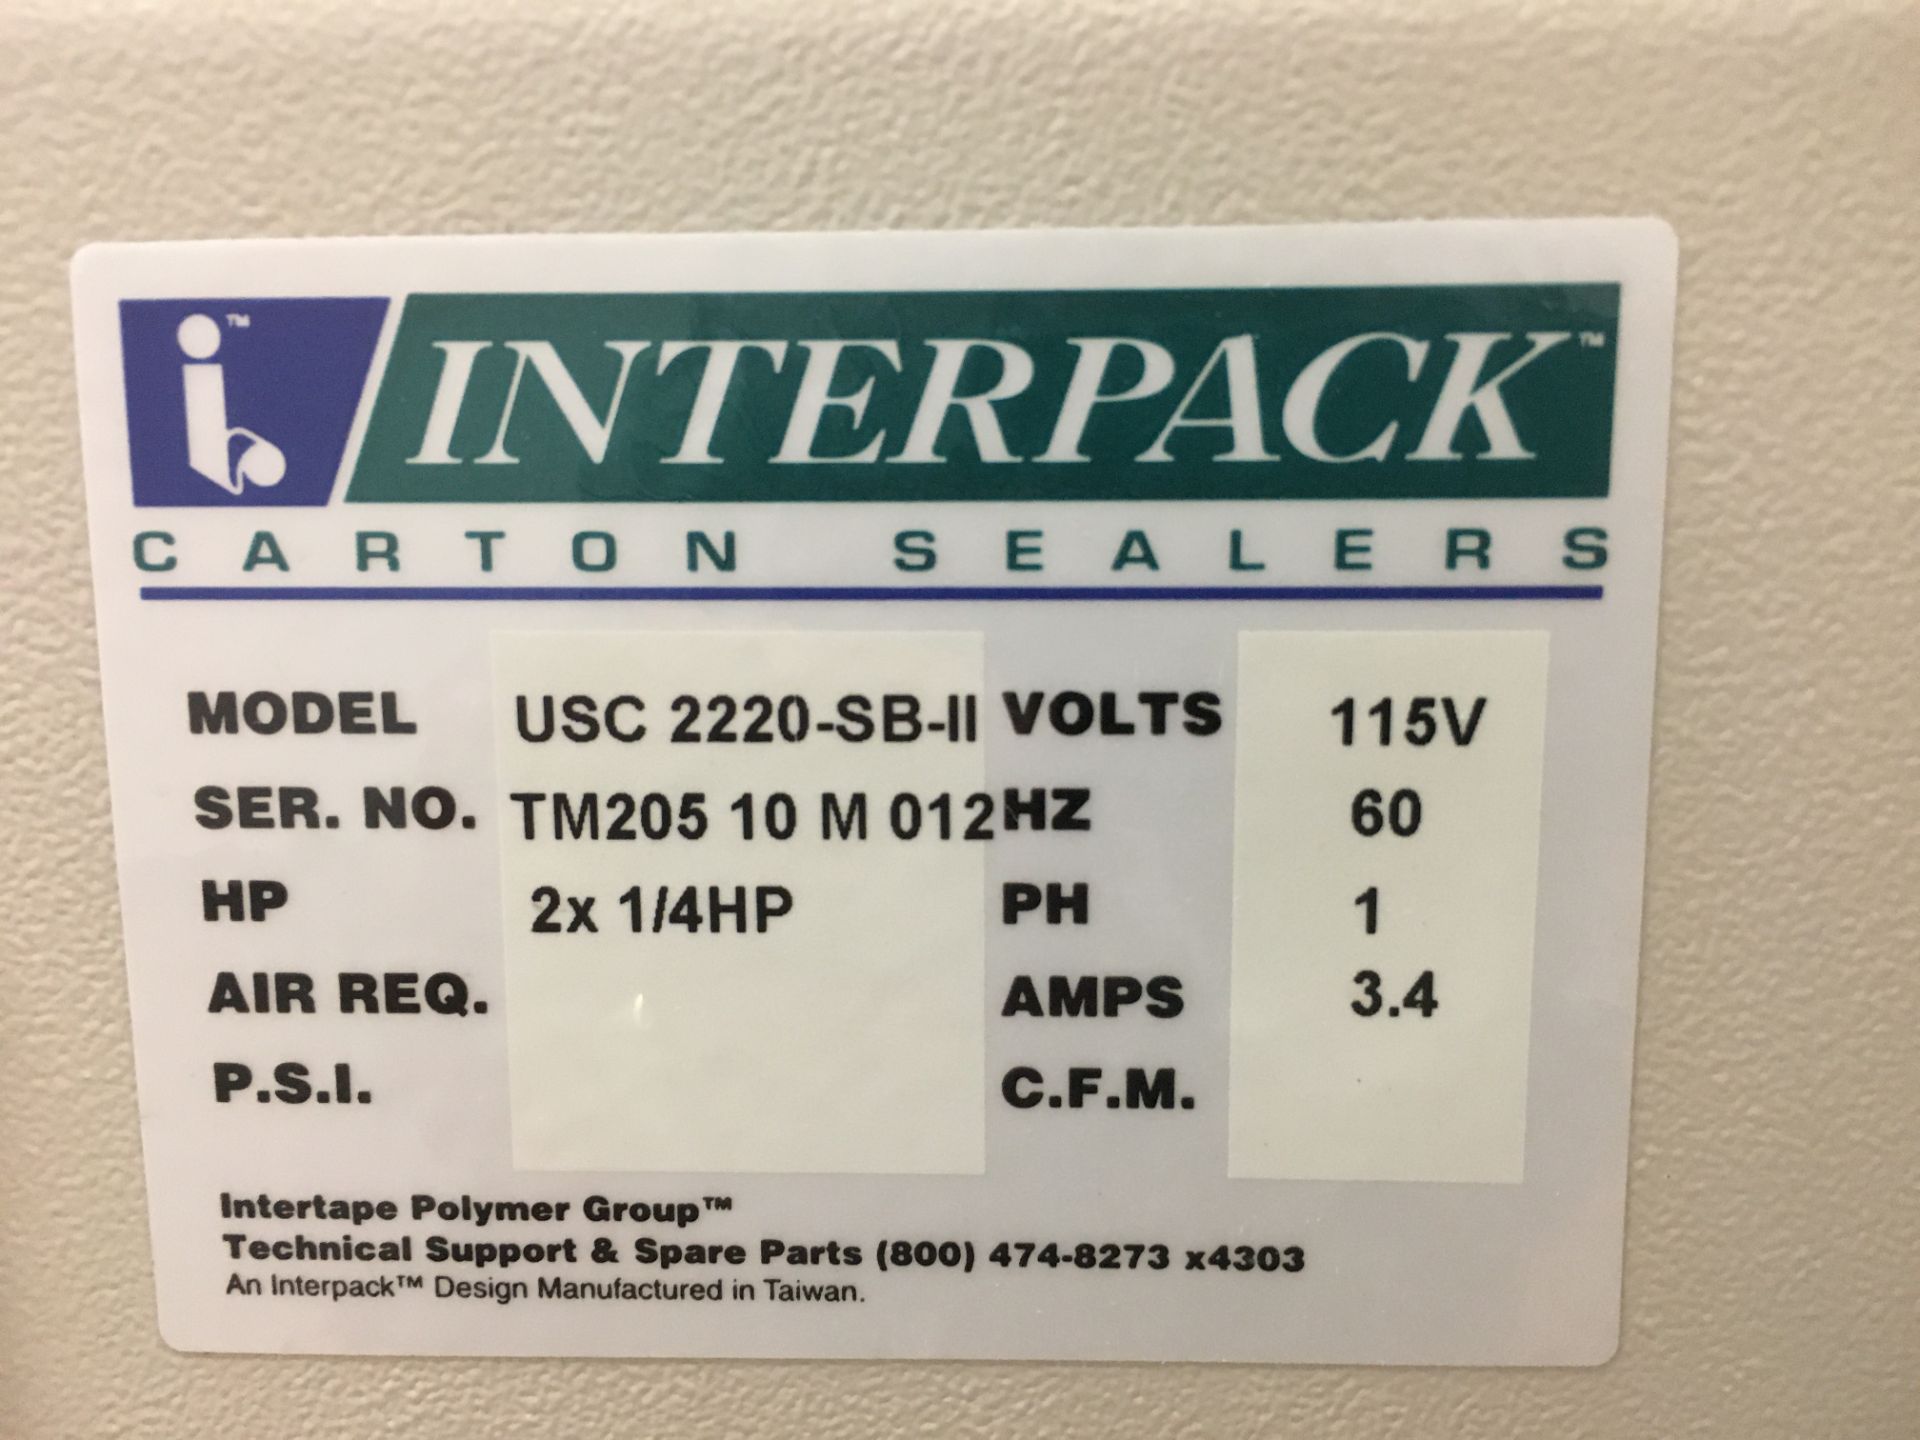 Interpack Carton Sealer With 115 Volts, S/N: TM205 10 M 012 Model: USC 2220-SB-II Rigging: $50 - Image 2 of 2